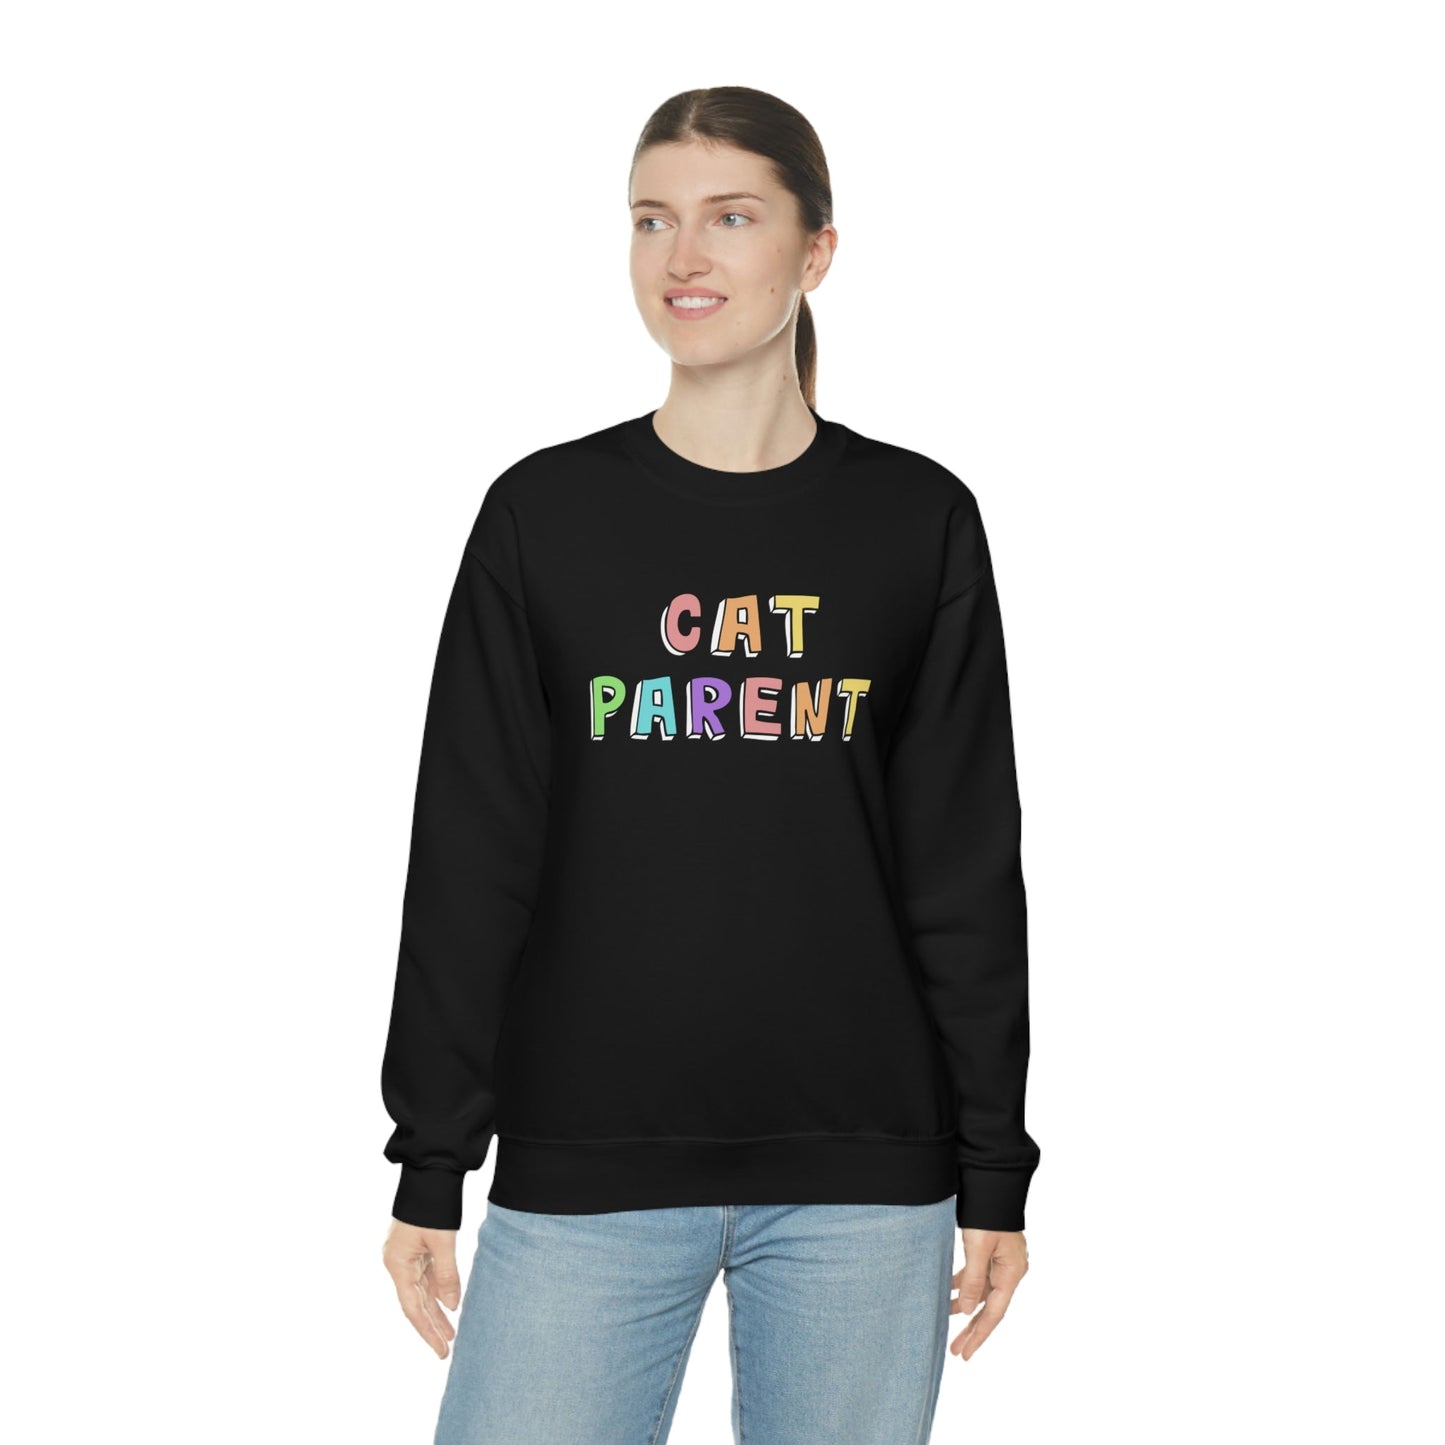 Cat Parent | Crewneck Sweatshirt - Detezi Designs-40844325995089025459